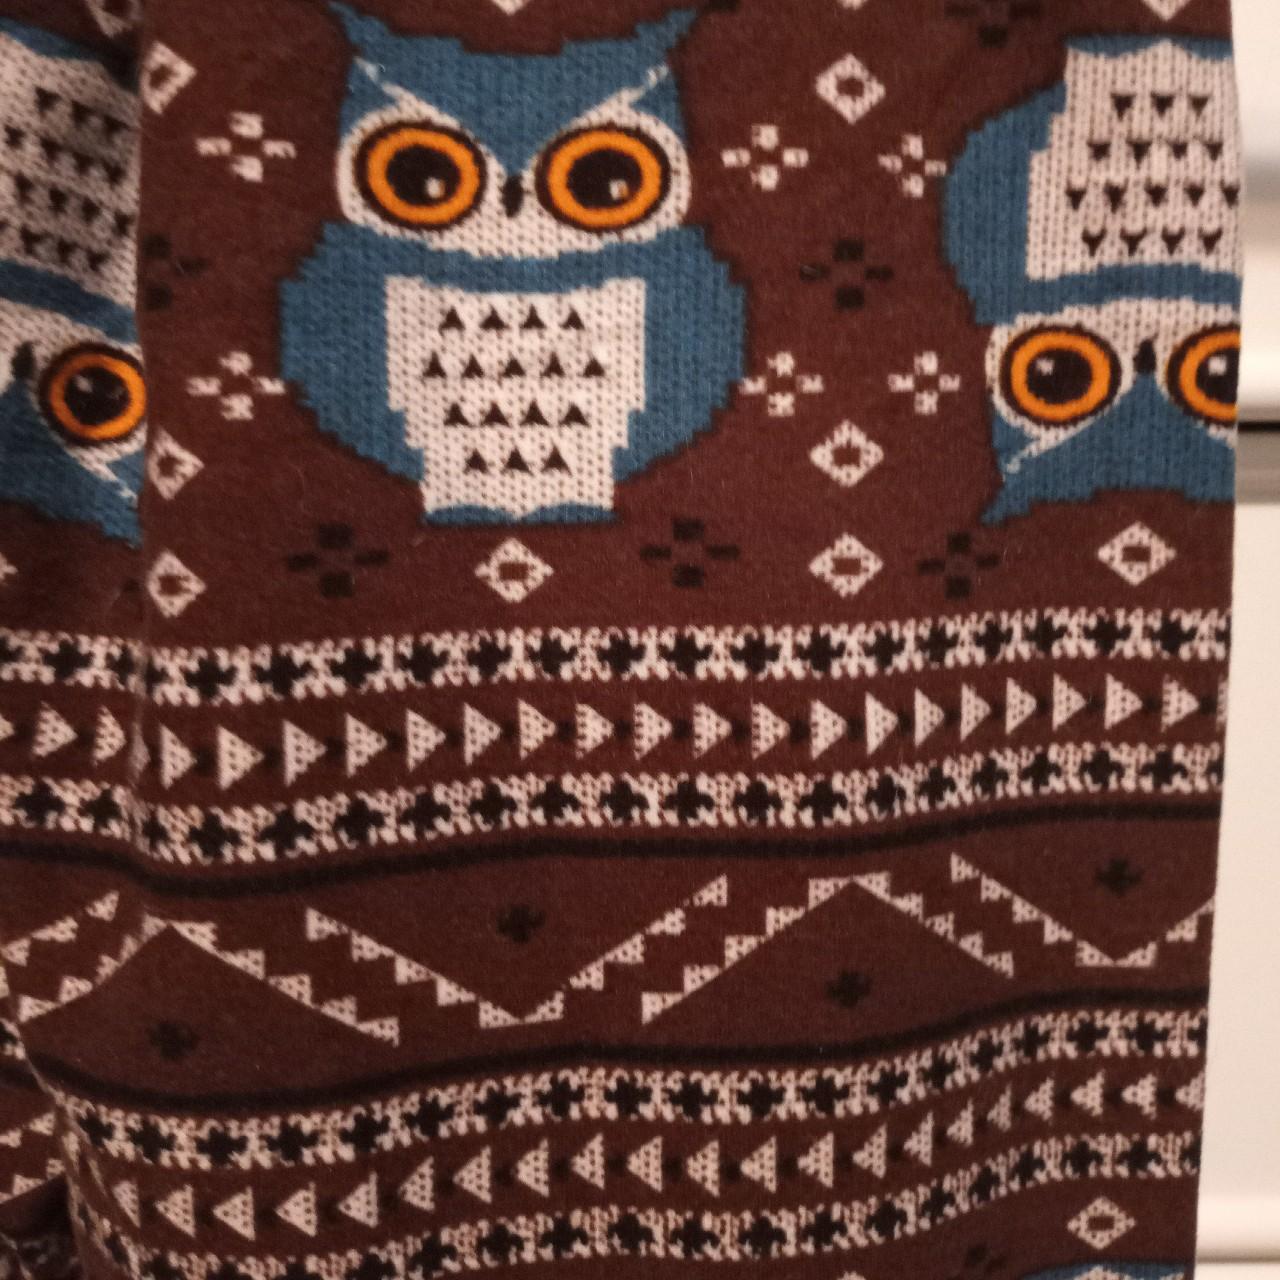 No Boundaries owl print leggings with brown - Depop